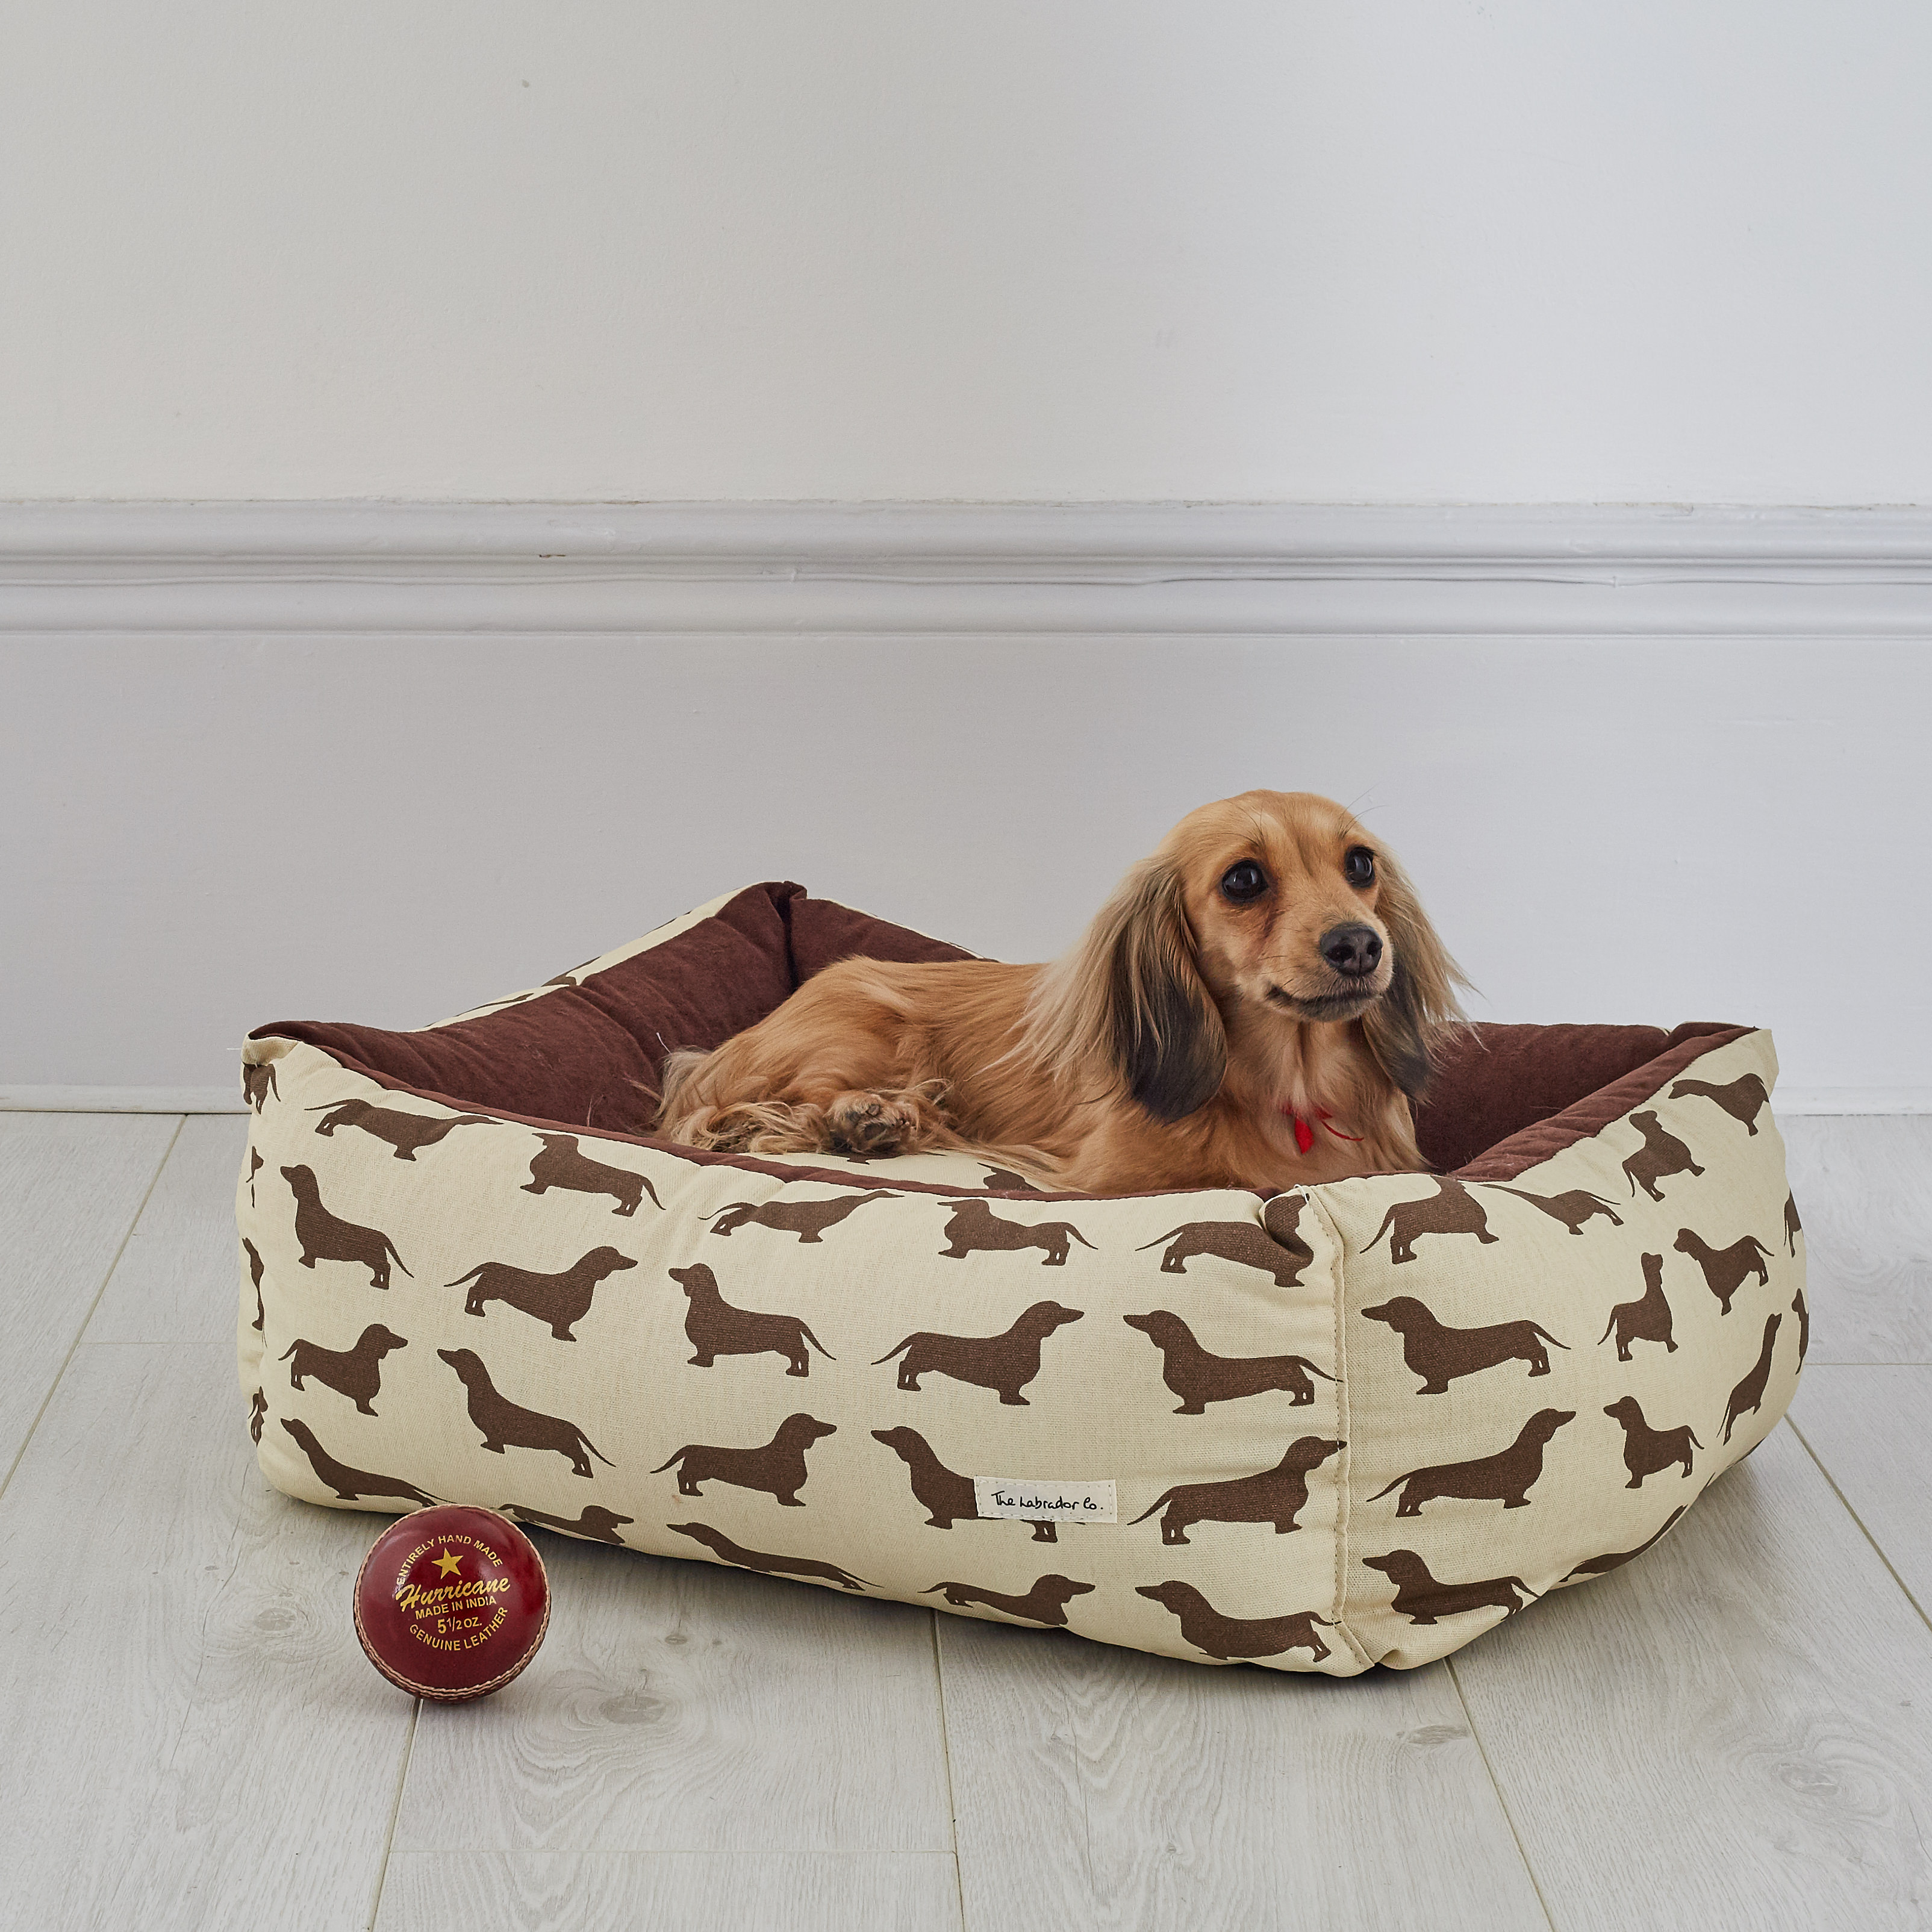 The Labrador Company Luxury Dog Beds